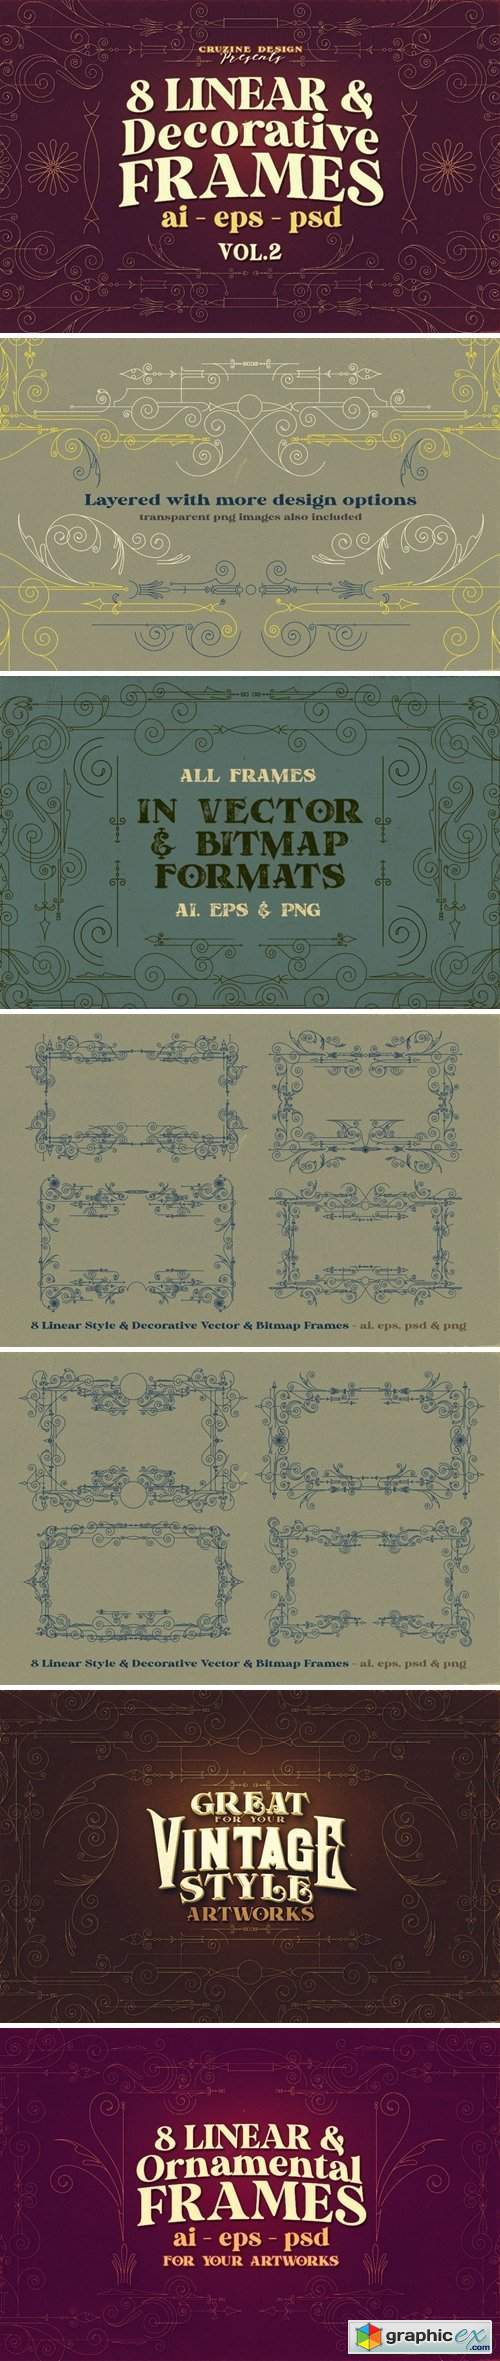 8 Decorative & Linear Frames - Vol.2